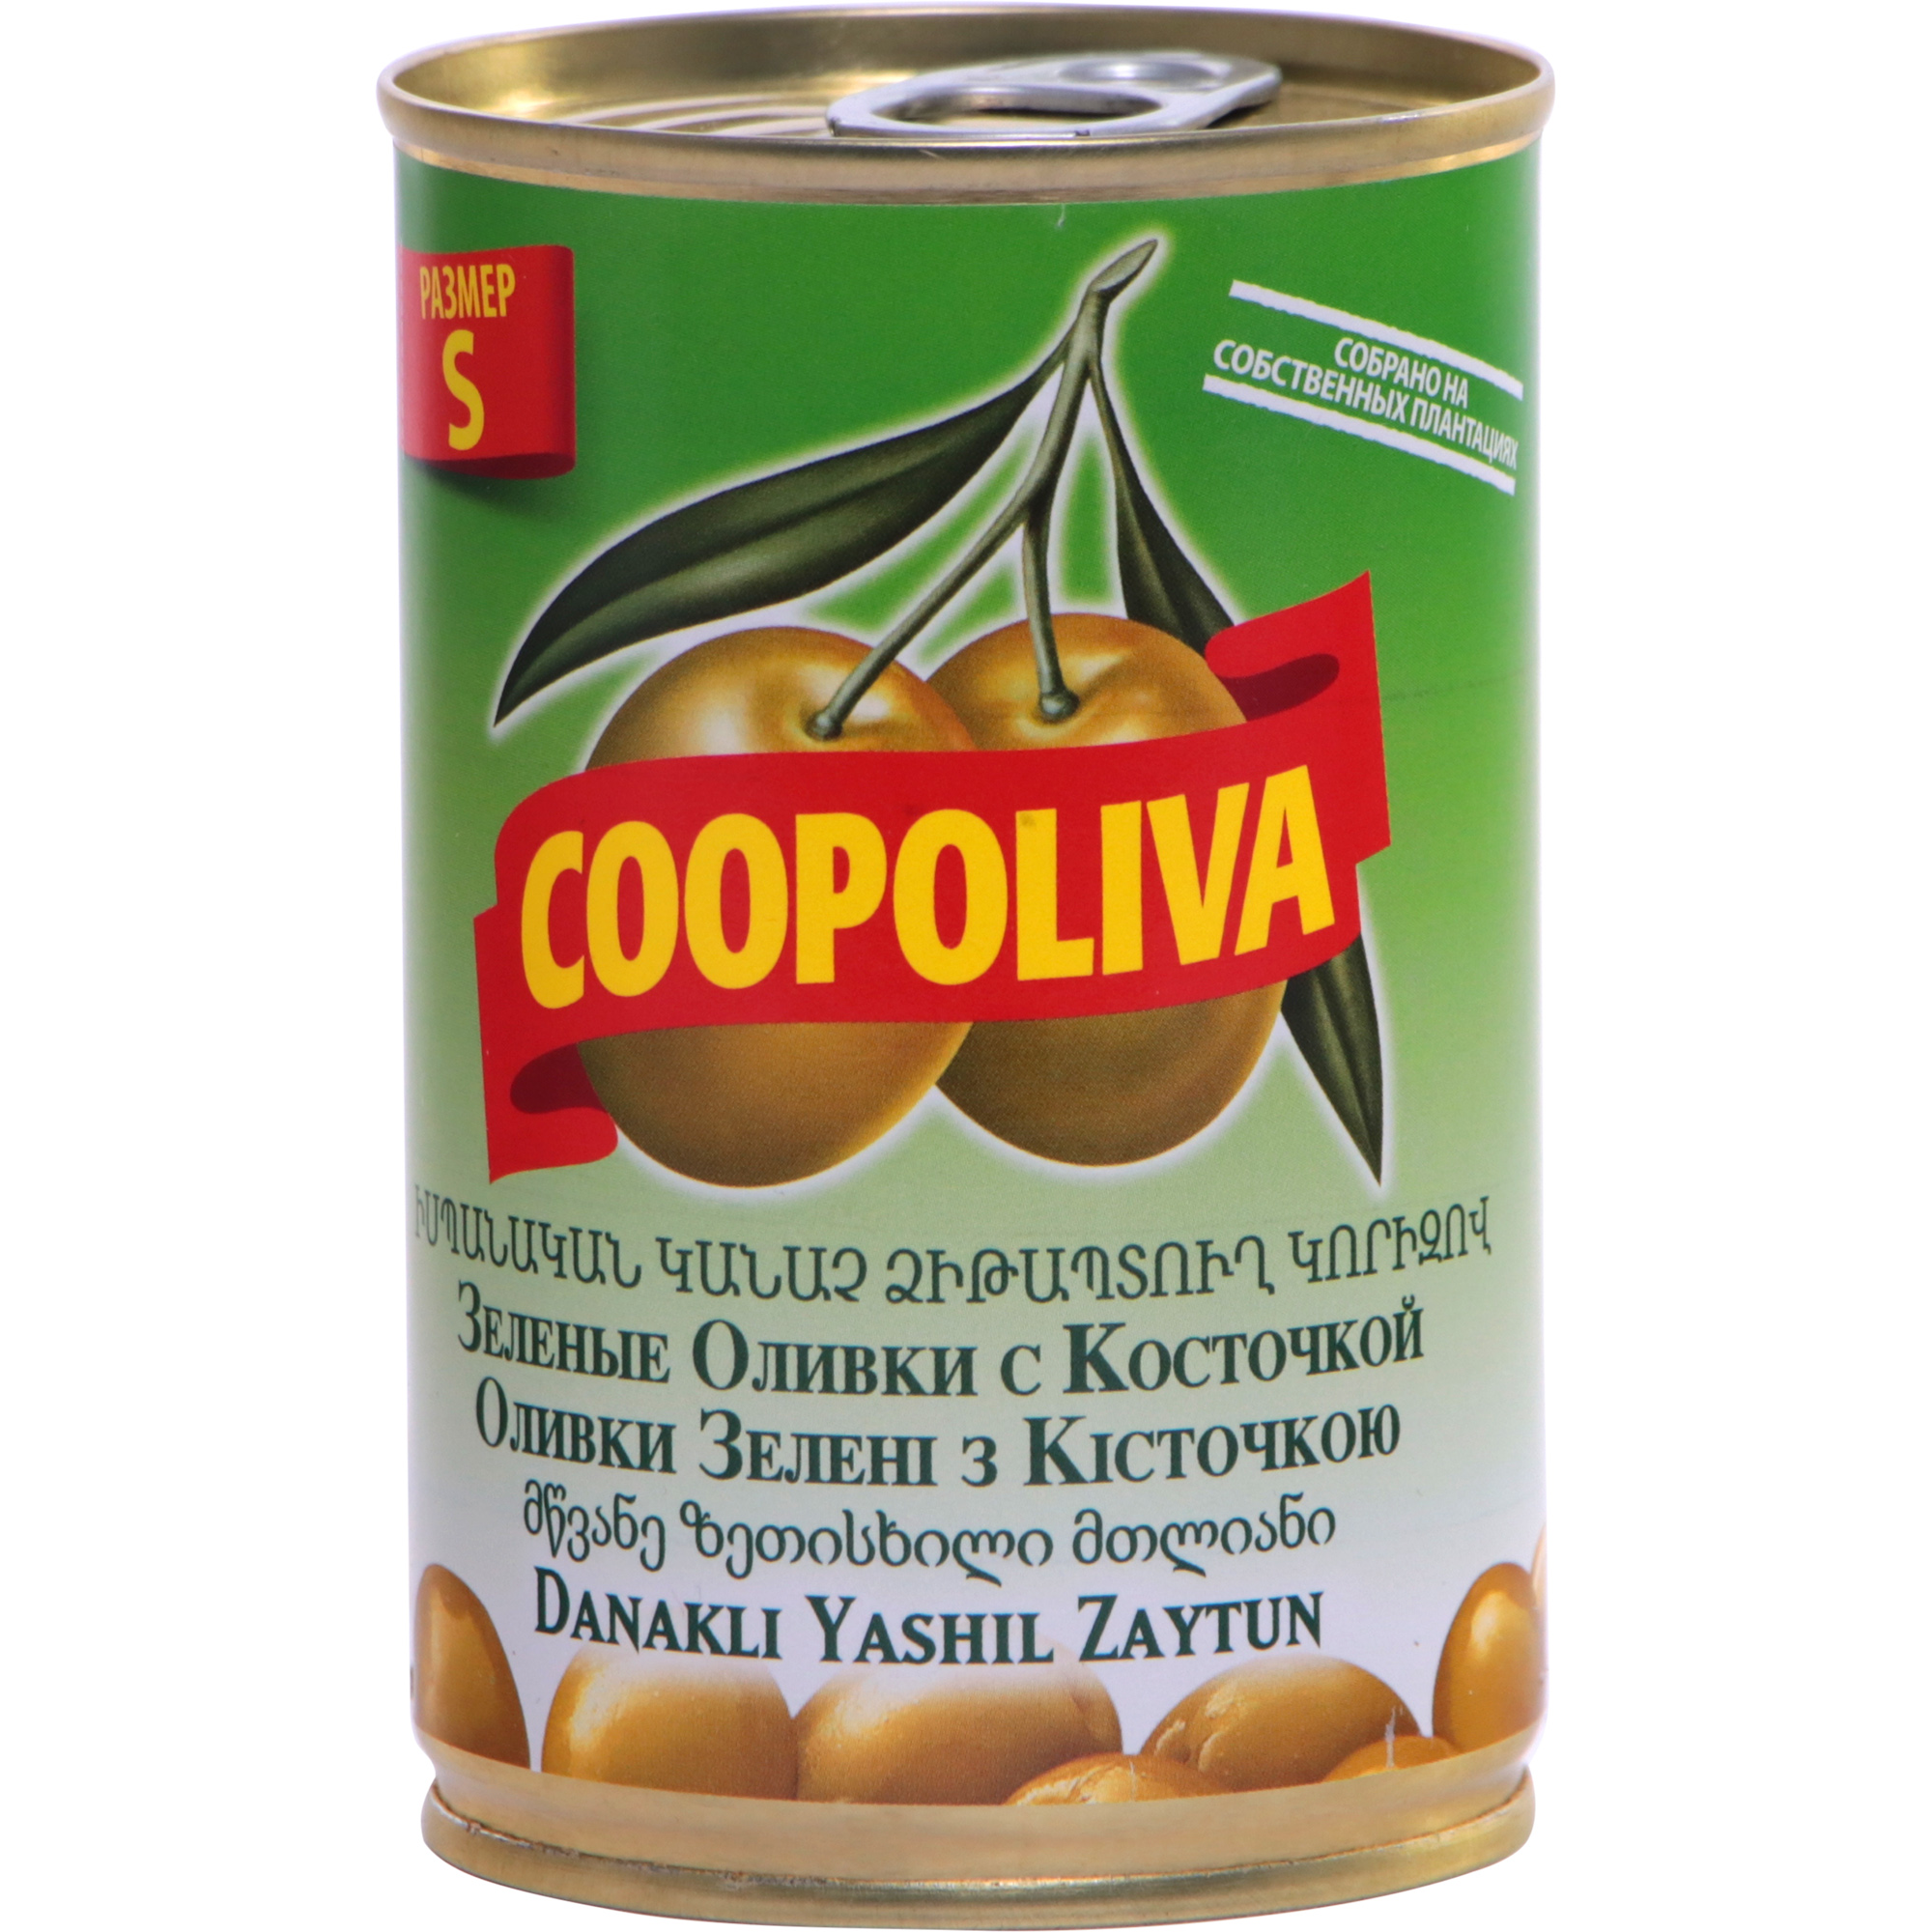 Оливки COOPOLIVA S с косточкой, 300 г